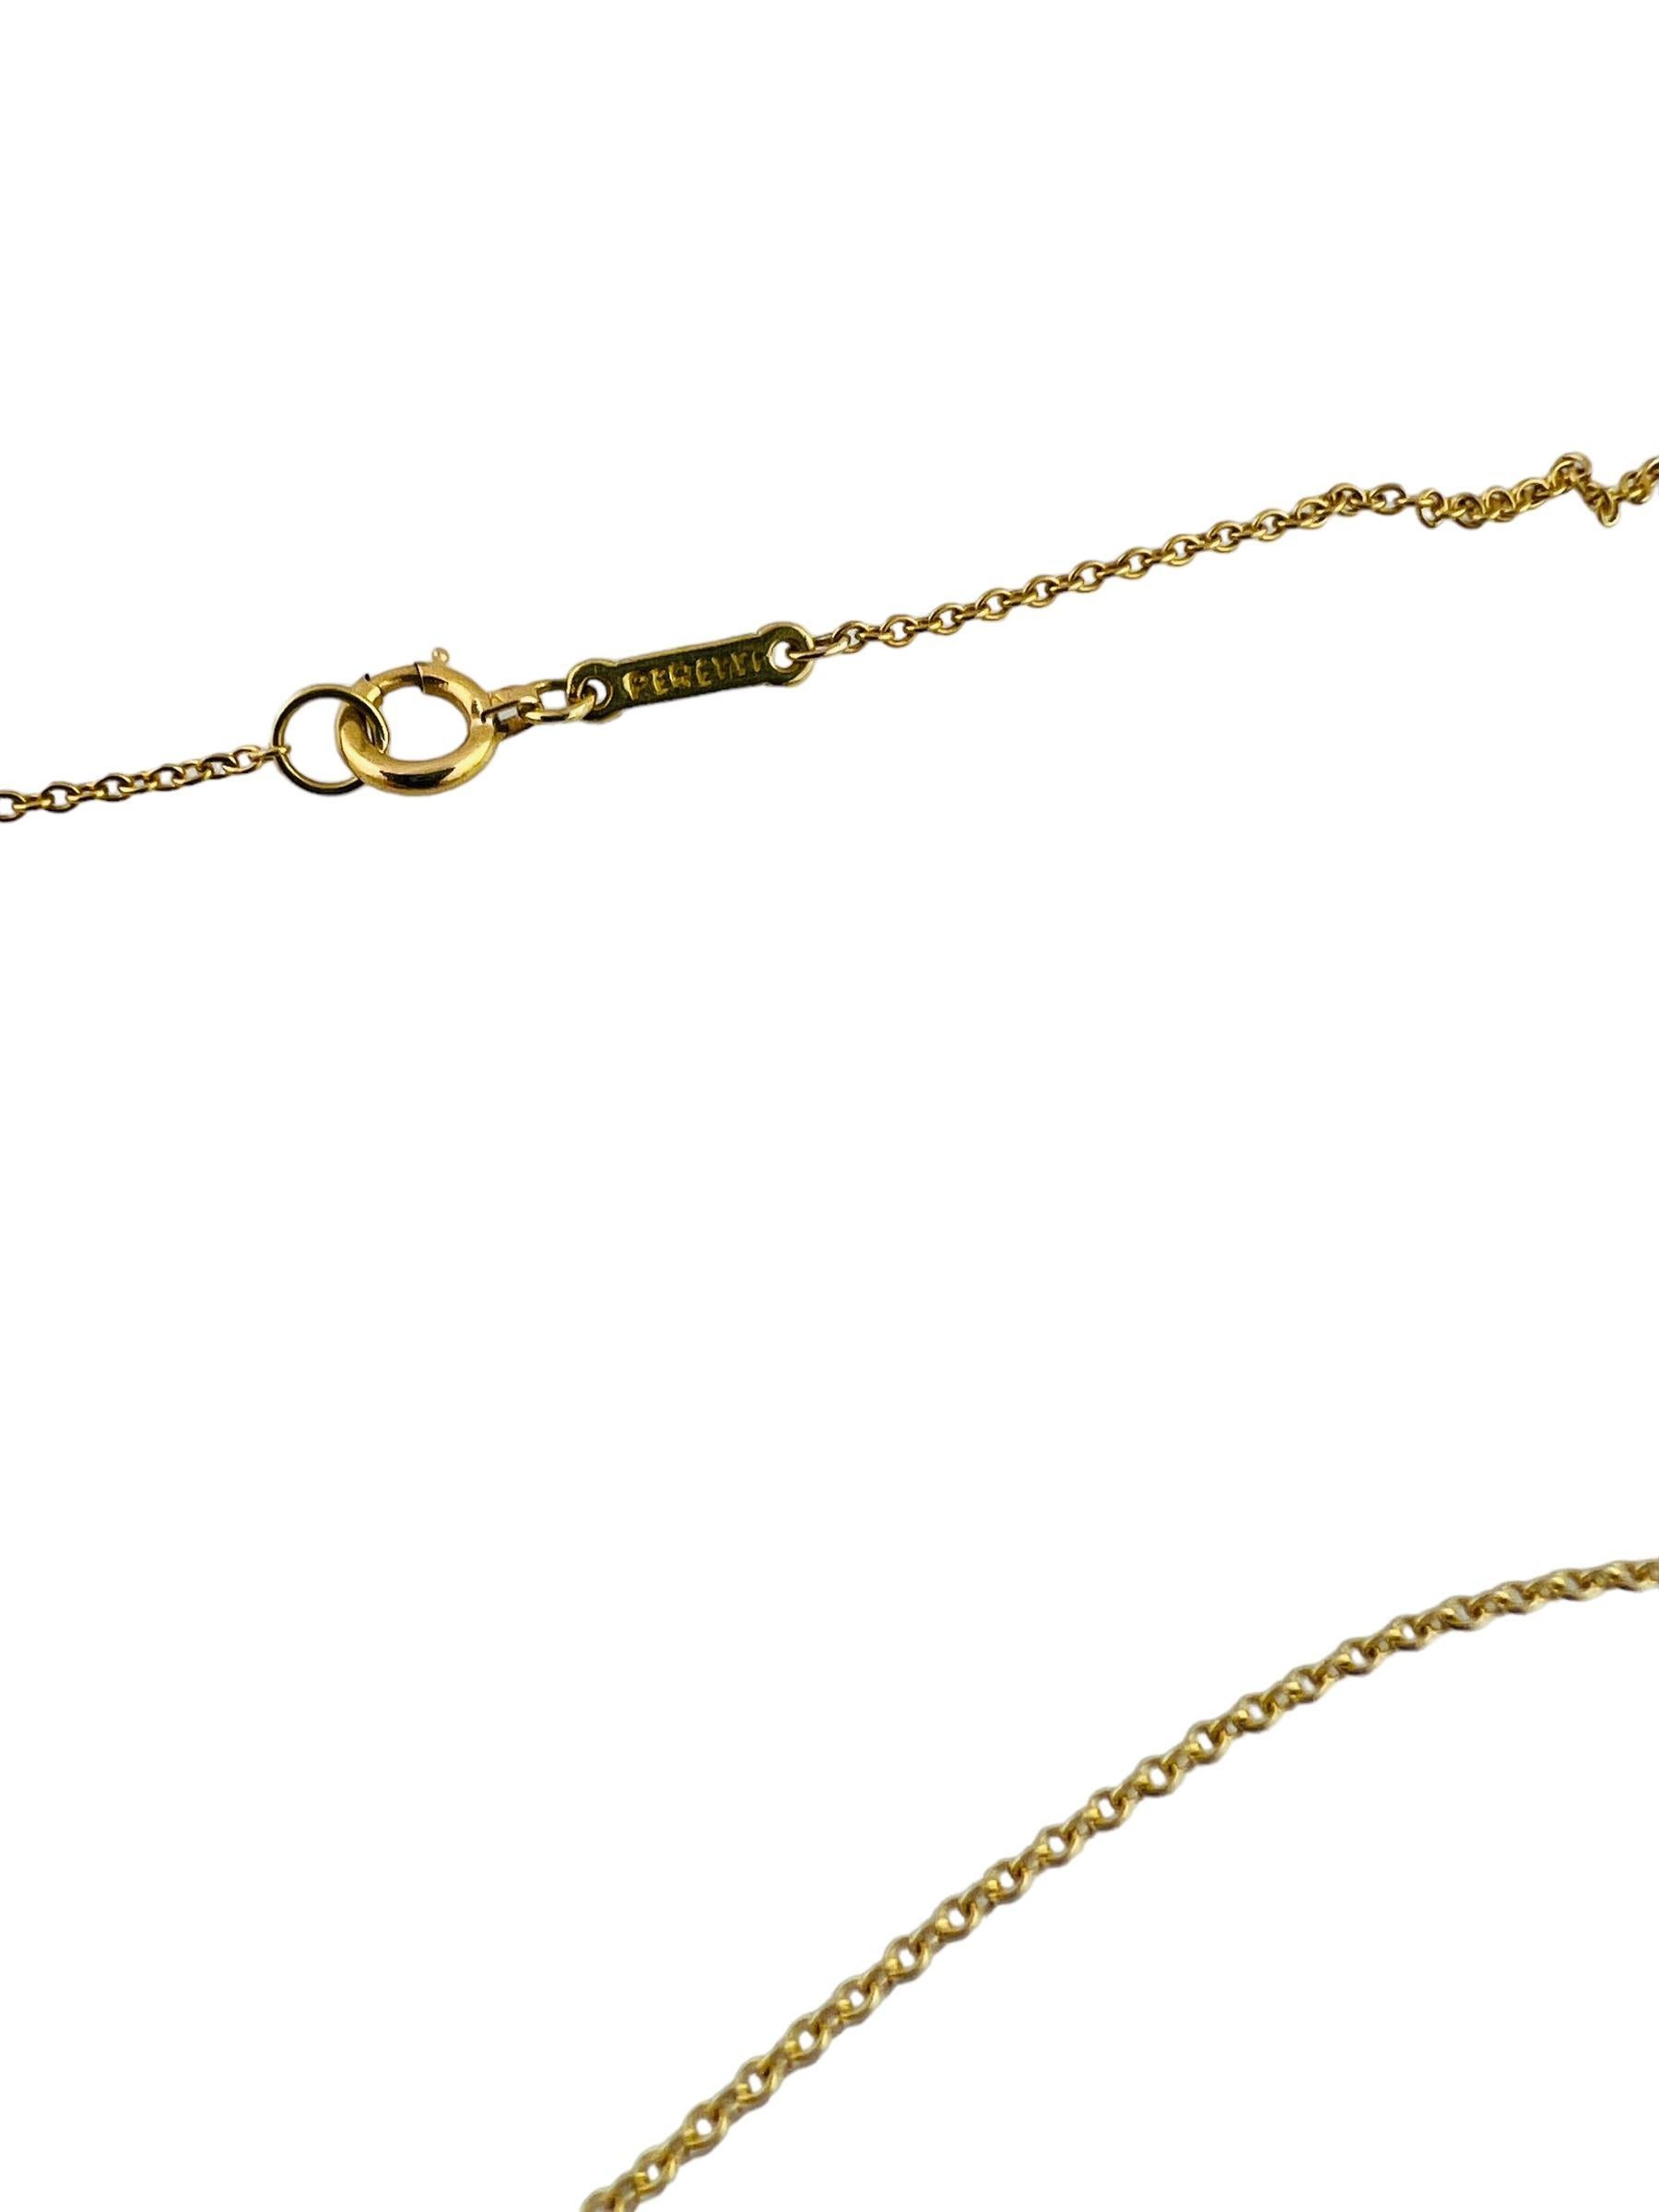 Tiffany & Co. Elsa Peretti 18K Yellow Gold Open Heart Pendant Necklace #15424 4